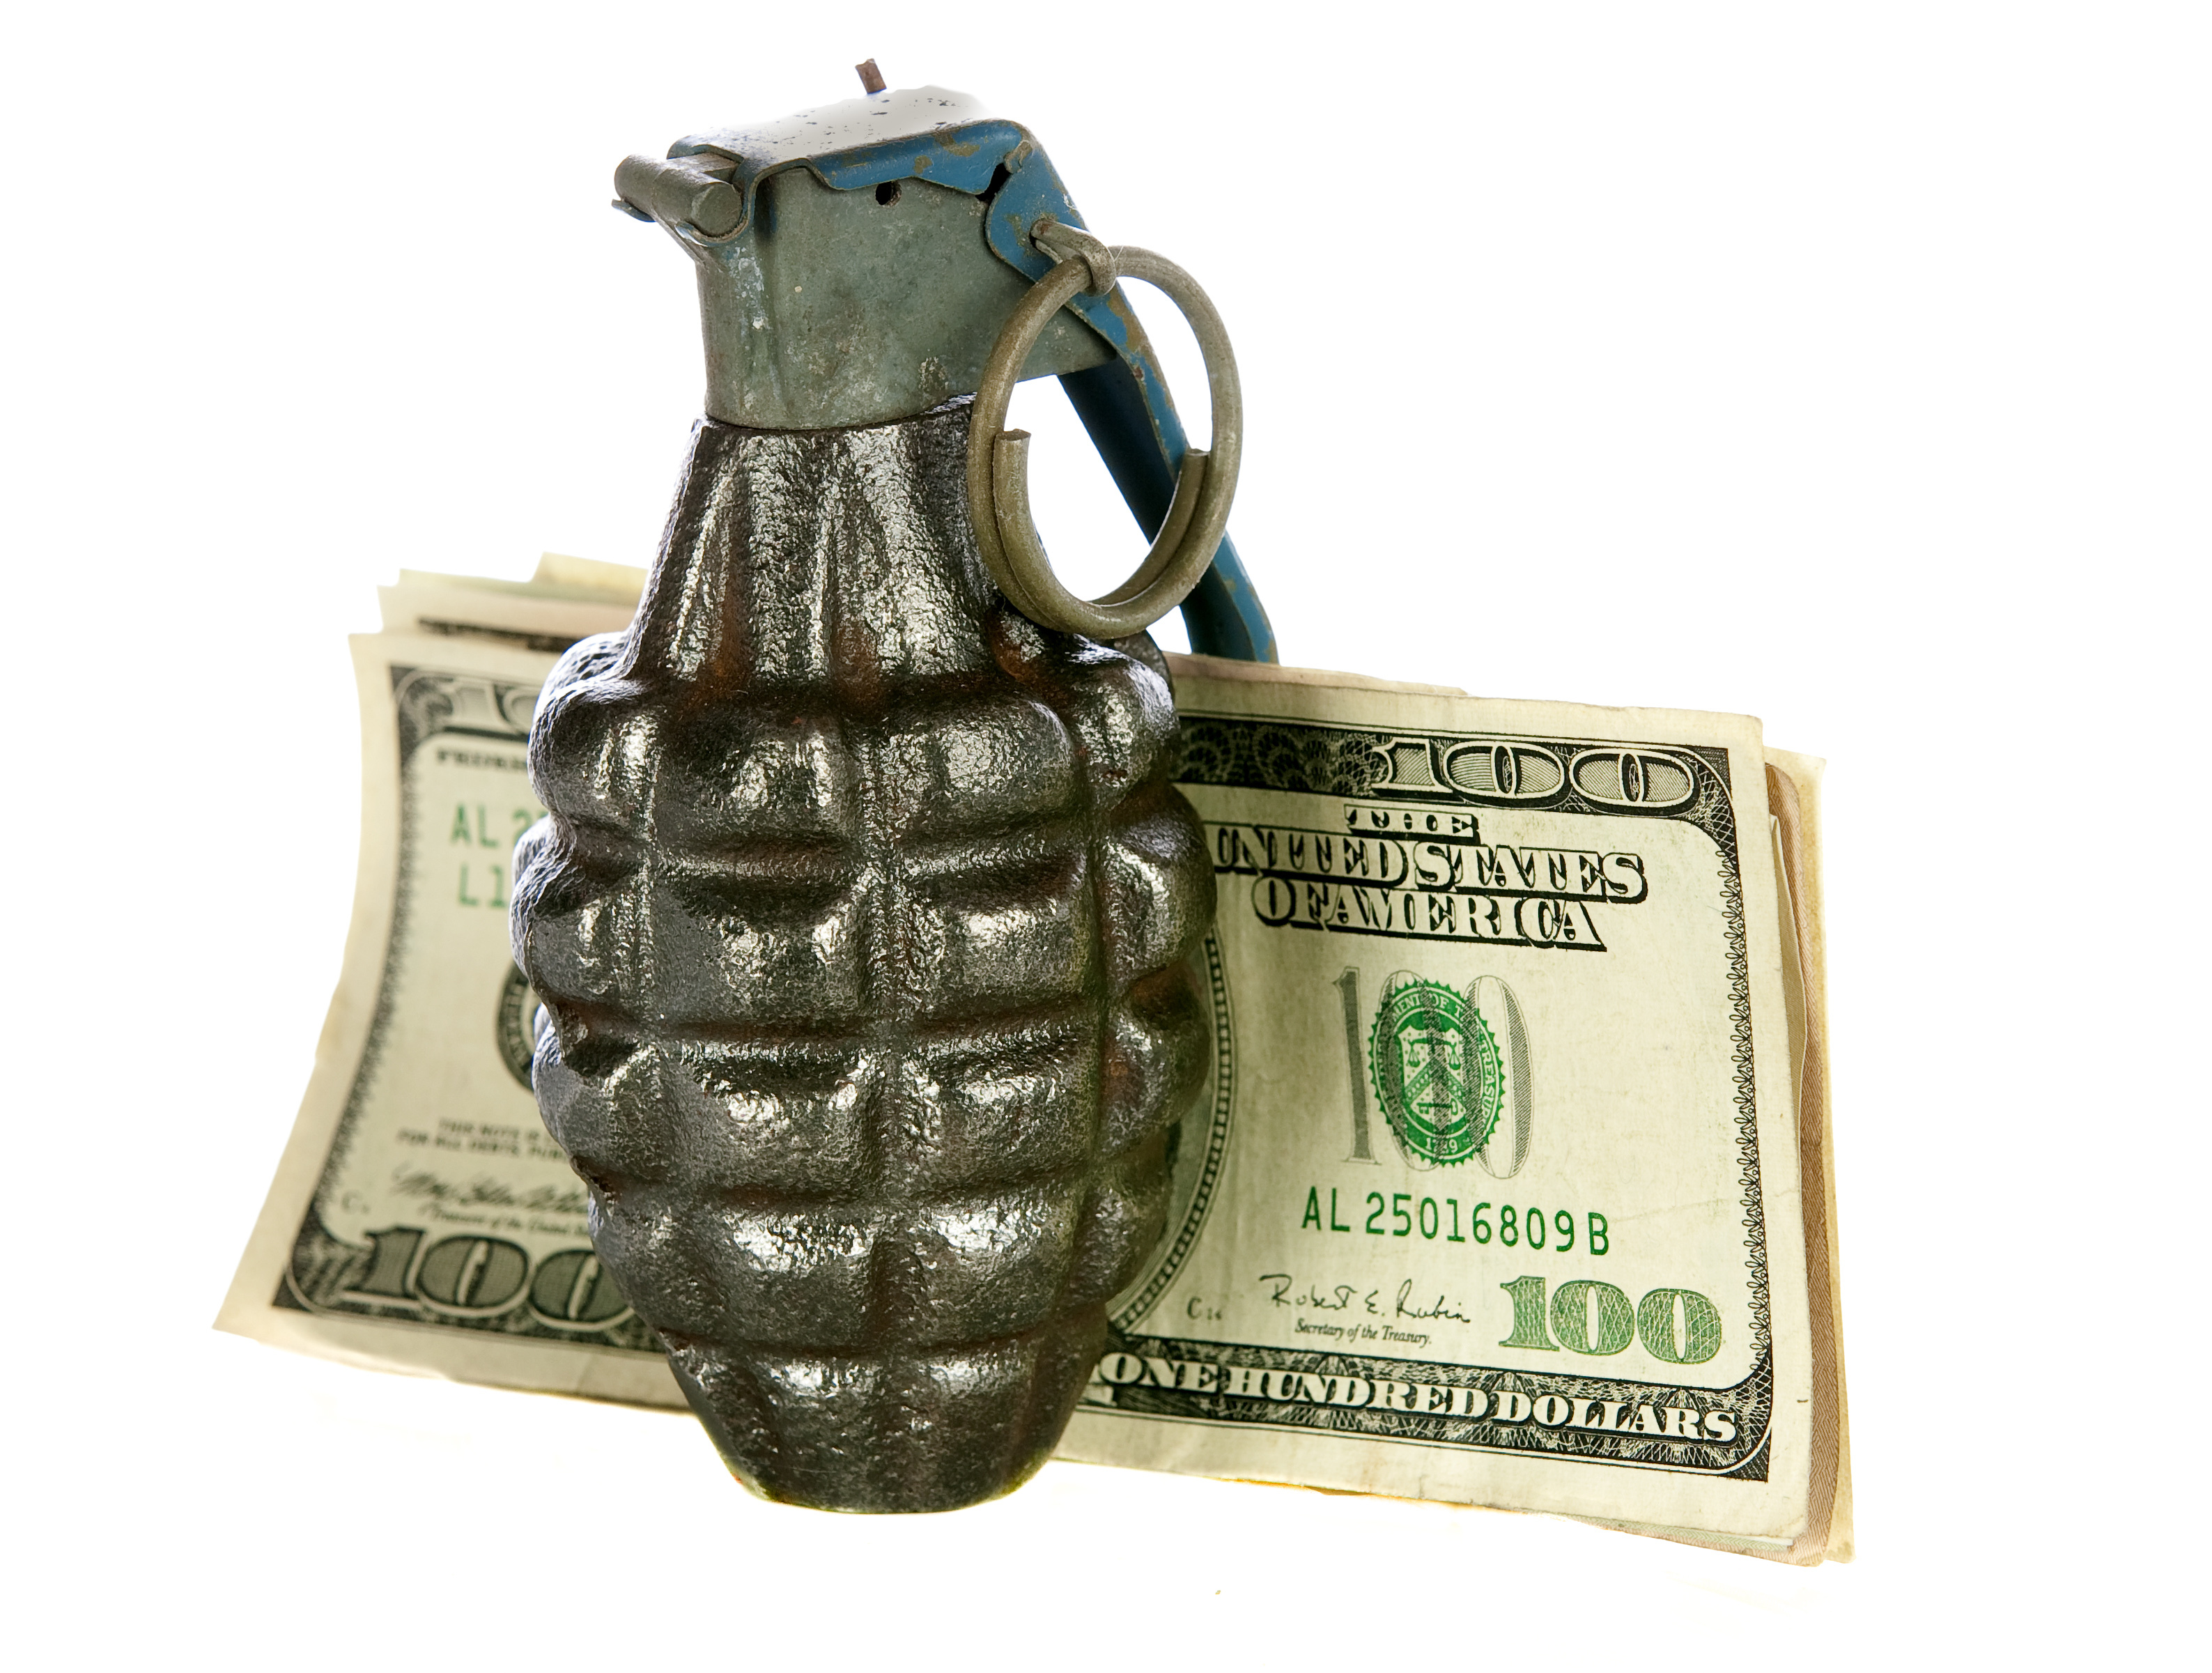 Grenade and money